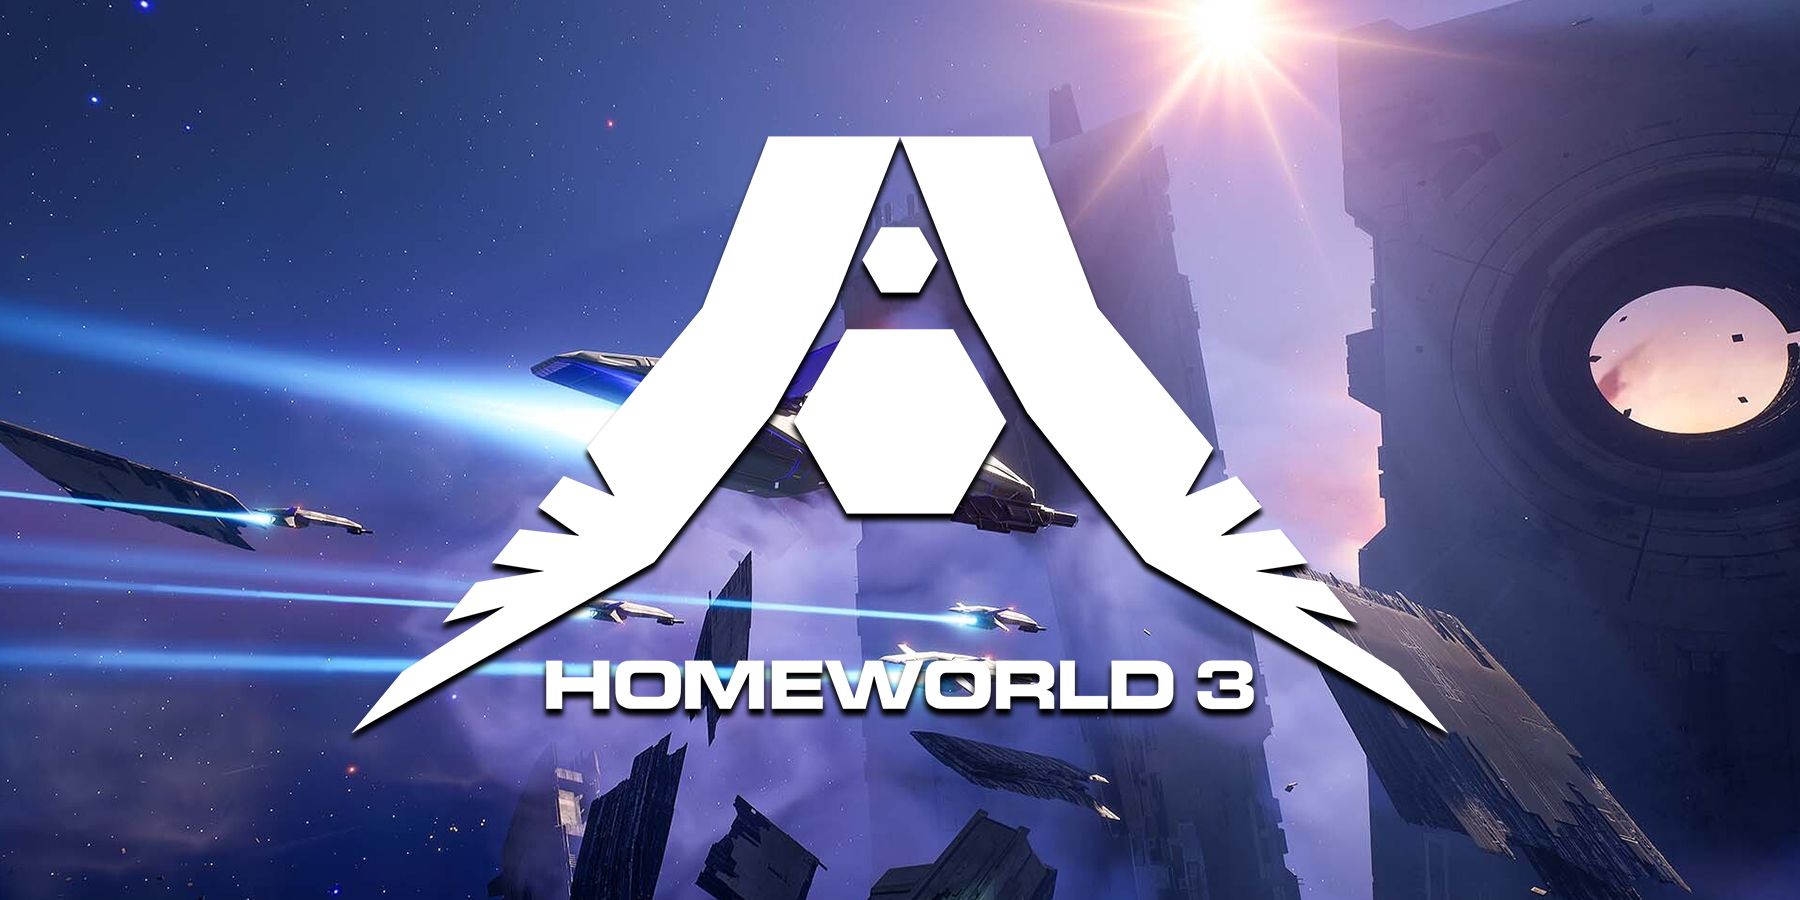 homeworld 3 initial release date